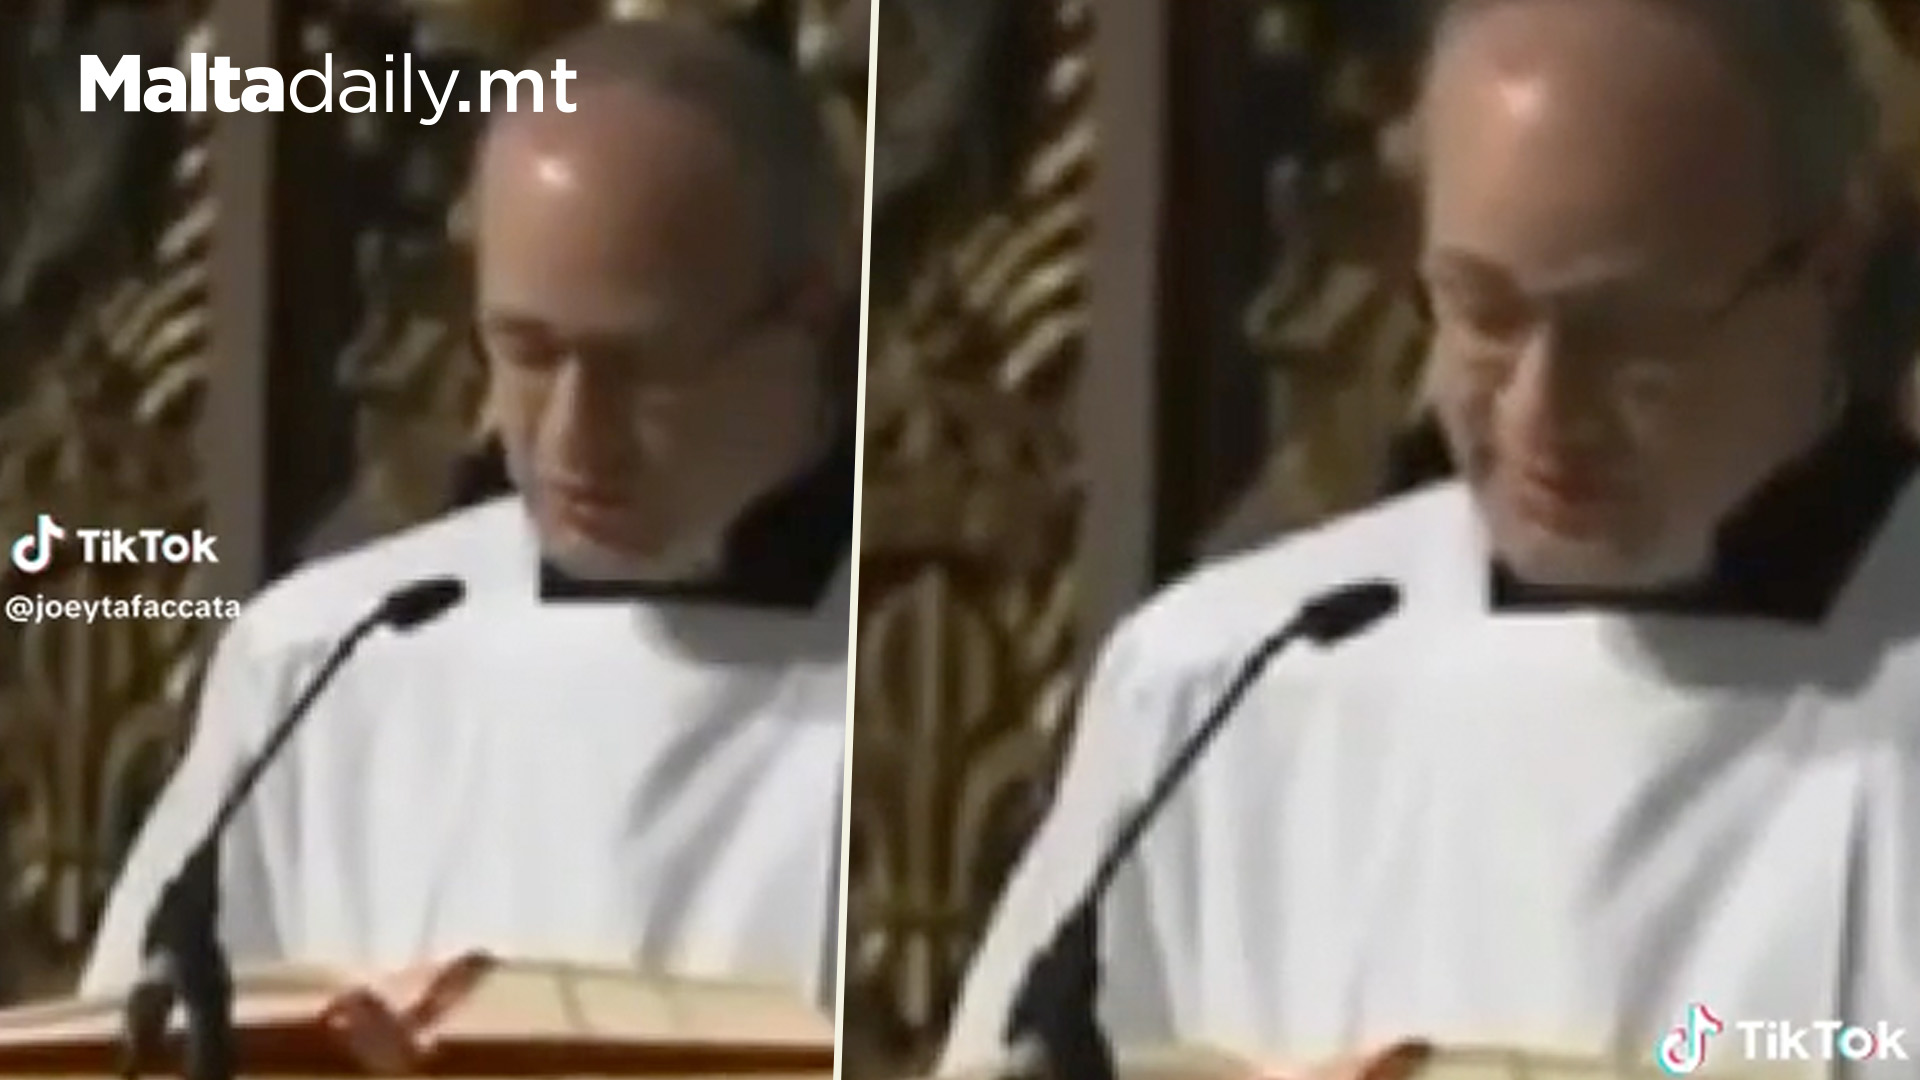 "Żb*b": Priest's Viral Easter Sermon Slip Up